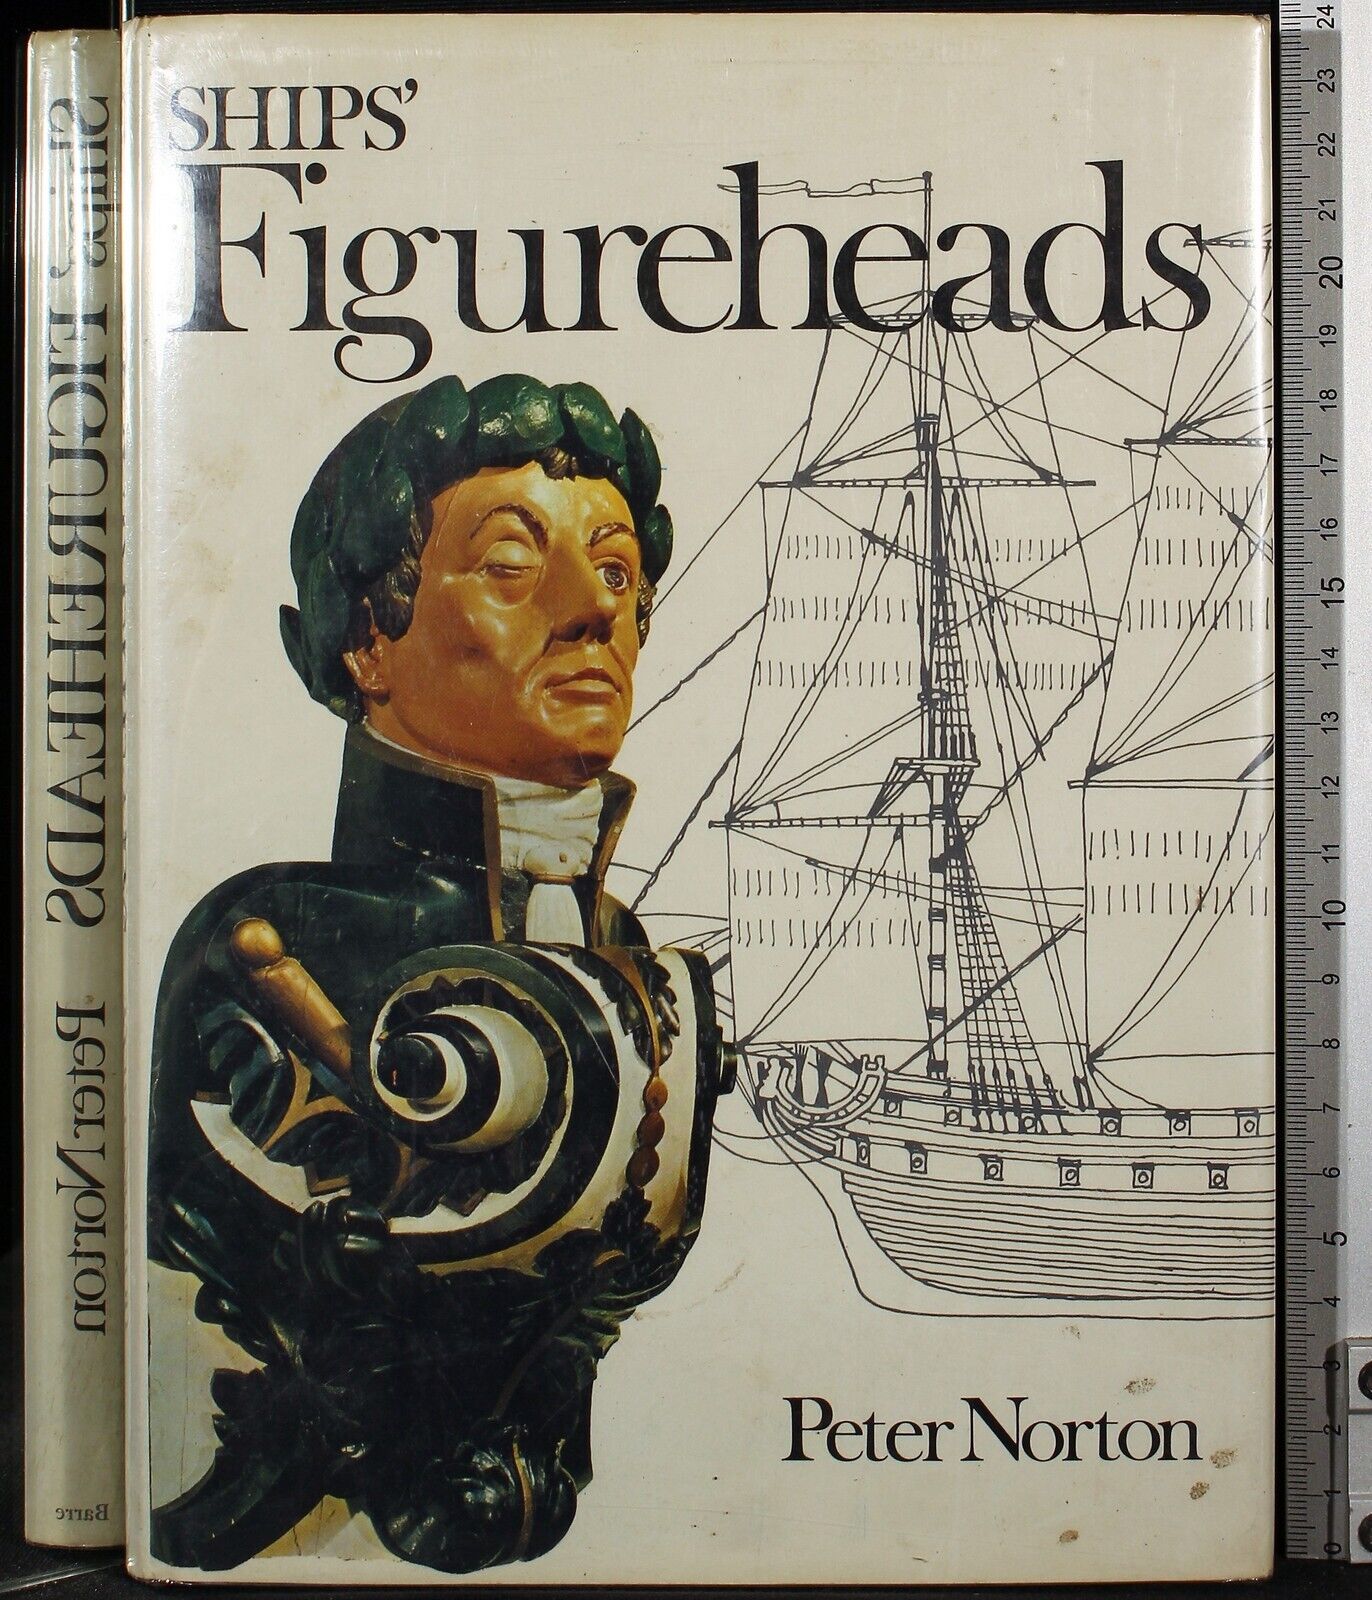 Ship's figureheads